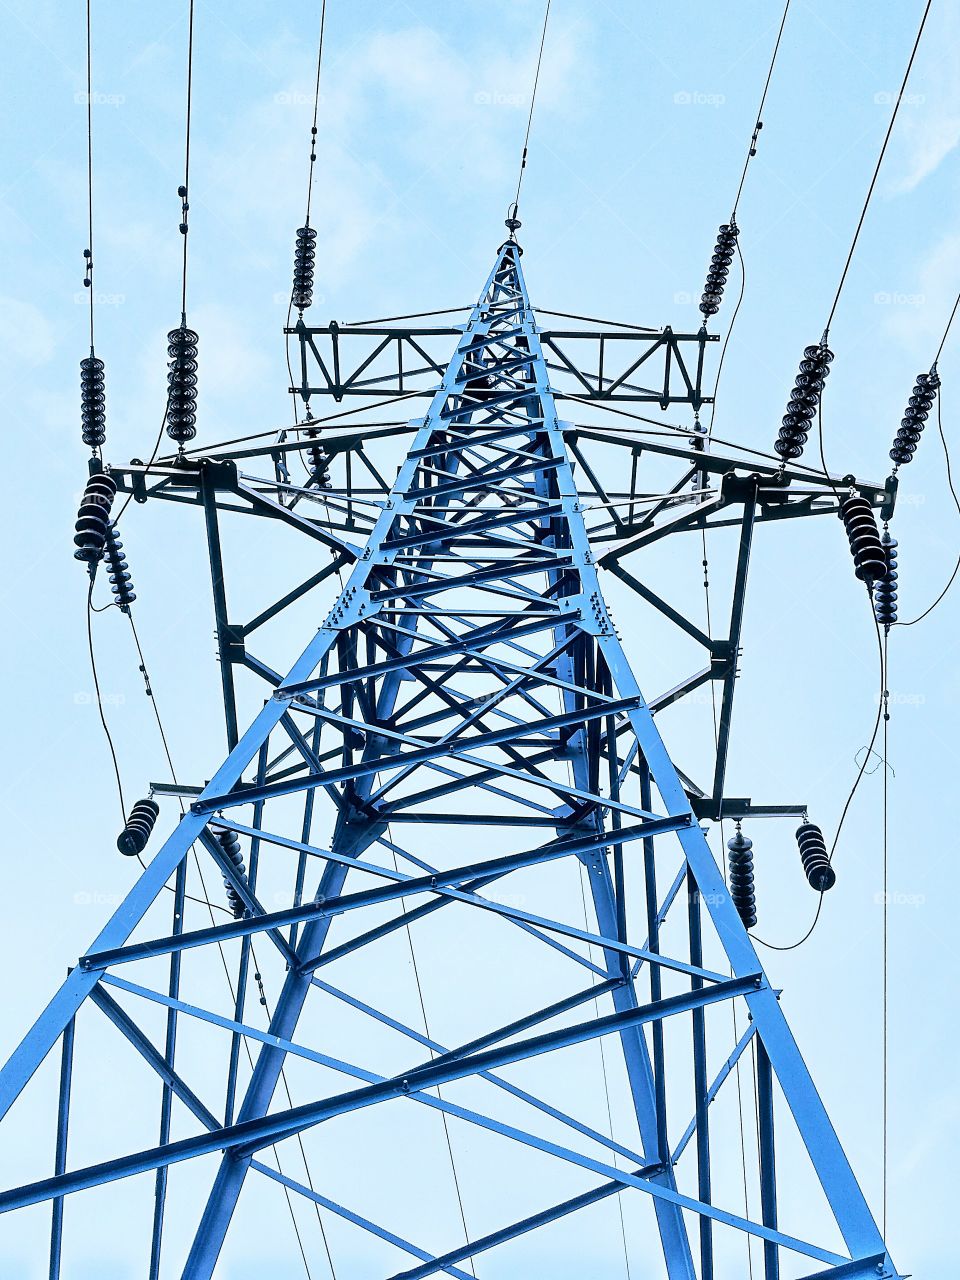 power line mast, metel construction,metalwork, electric insulatir, elrctrical wire,blue sky.